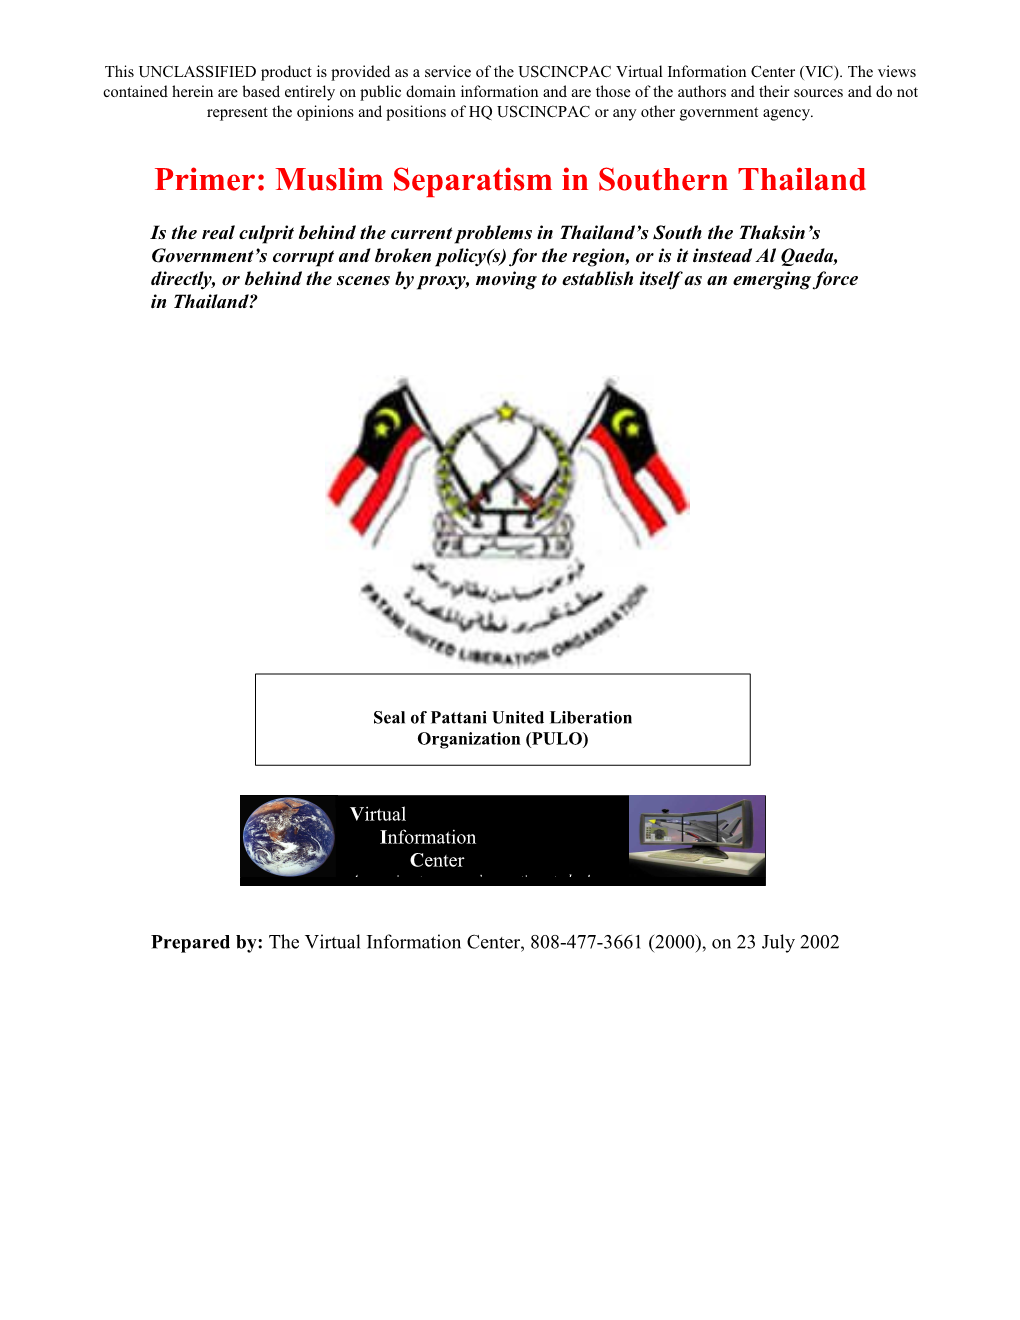 Primer: Muslim Separatism in Southern Thailand